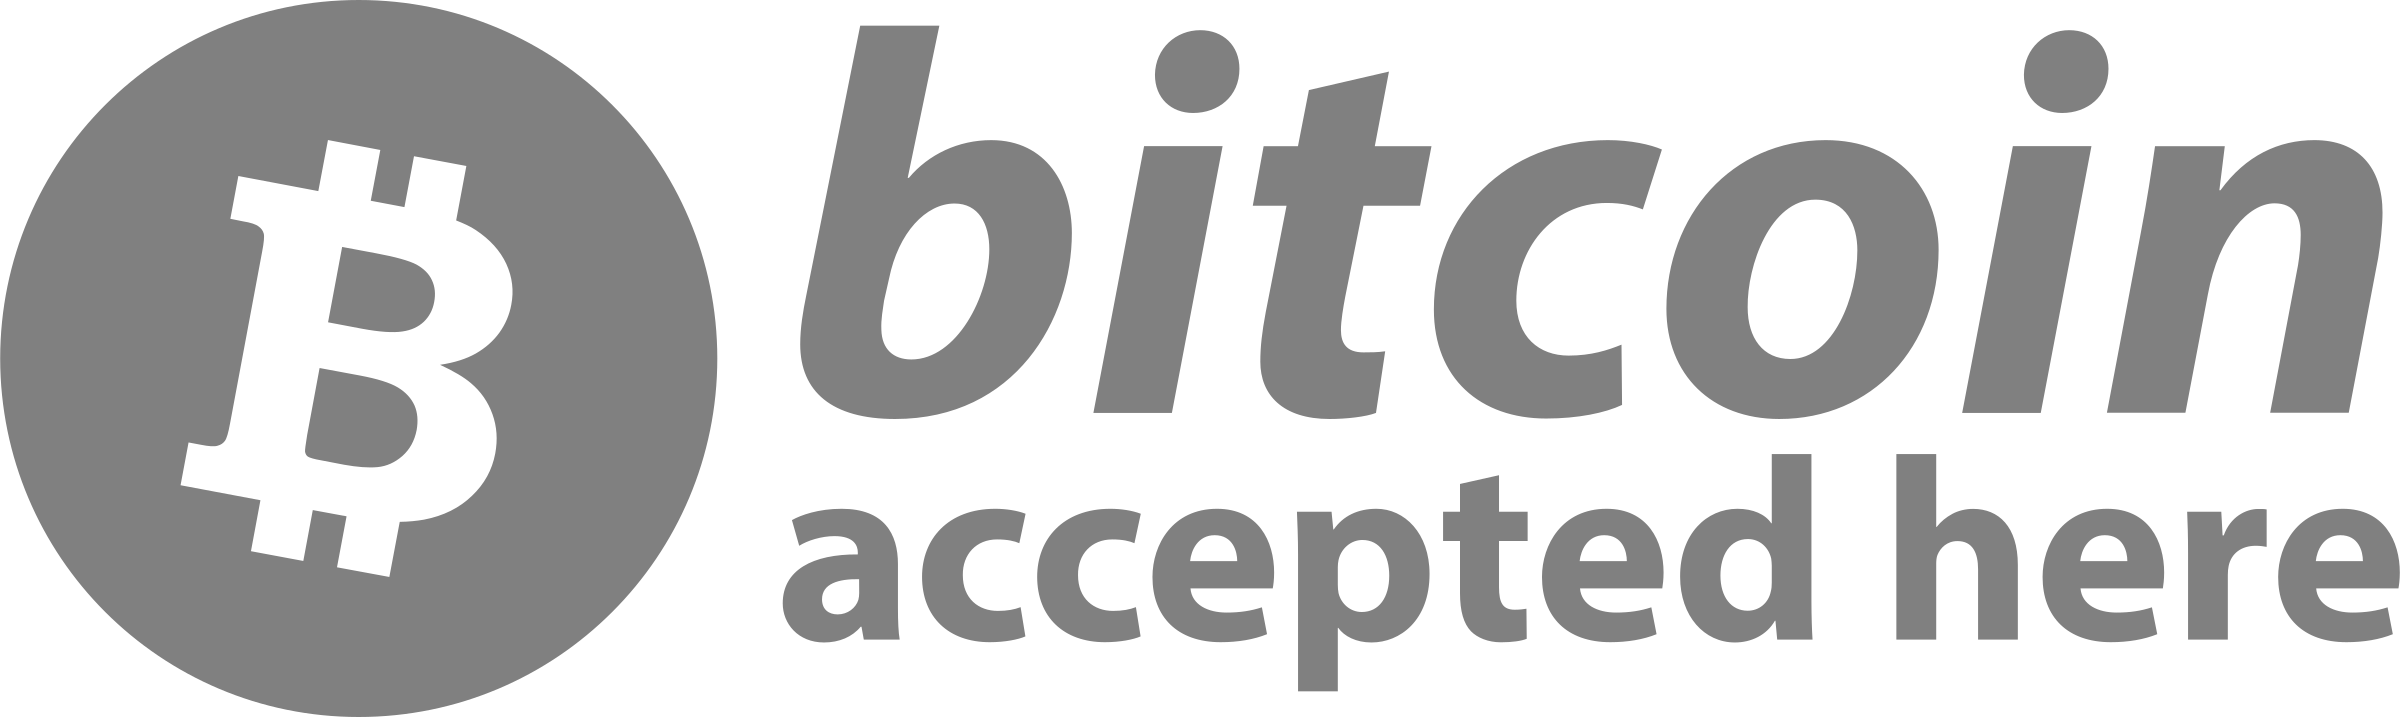 Black Bitcoin Logo - Bitcoin Accepted Here BTC Logo PNG Transparent & SVG Vector ...